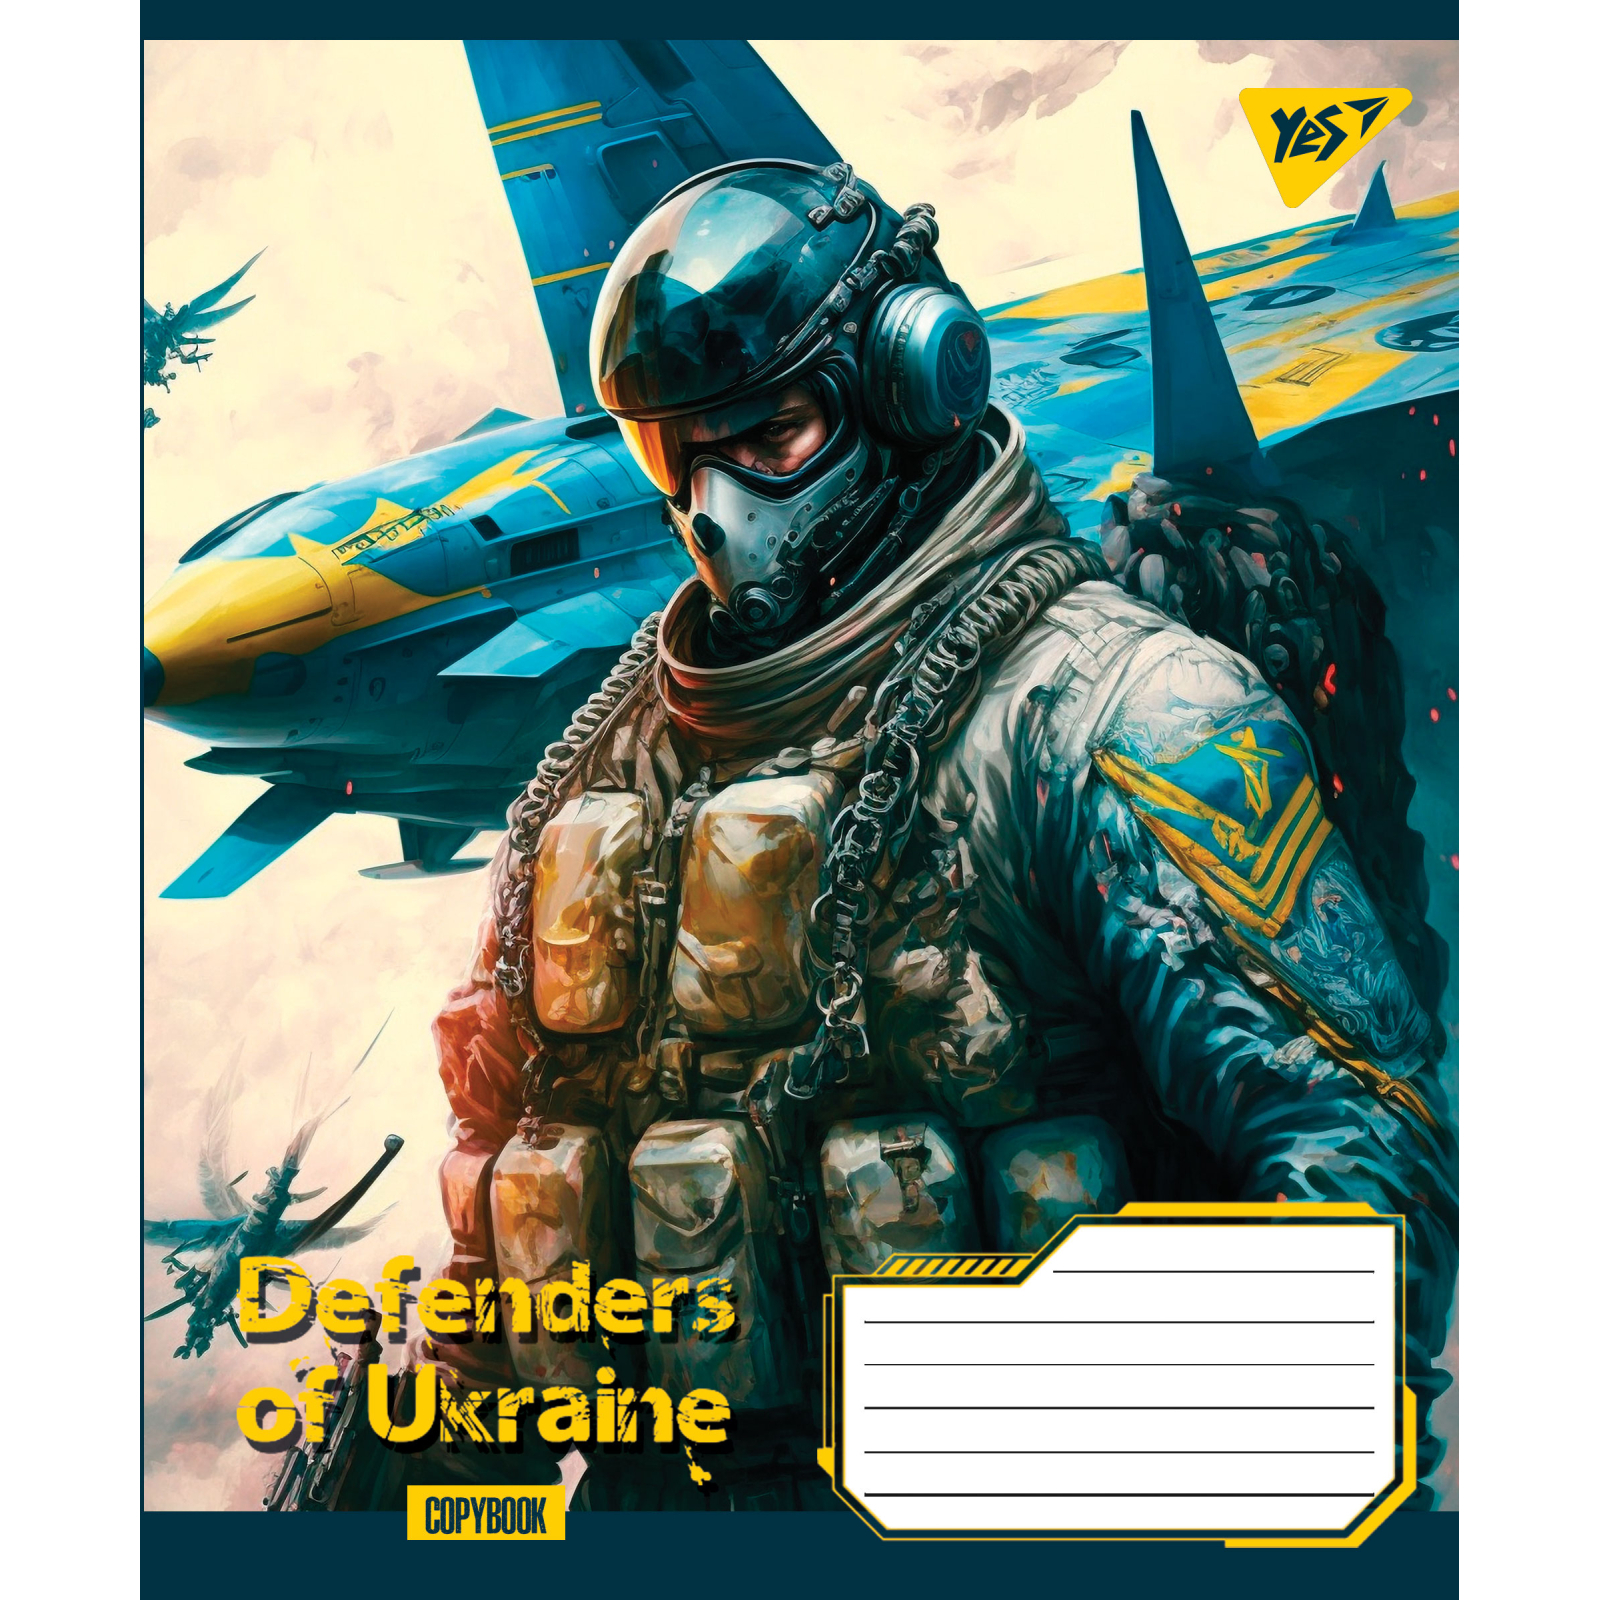 Тетрадь Yes А5 Defenders of Ukraine 96 листов, линия (766505) изображение 2